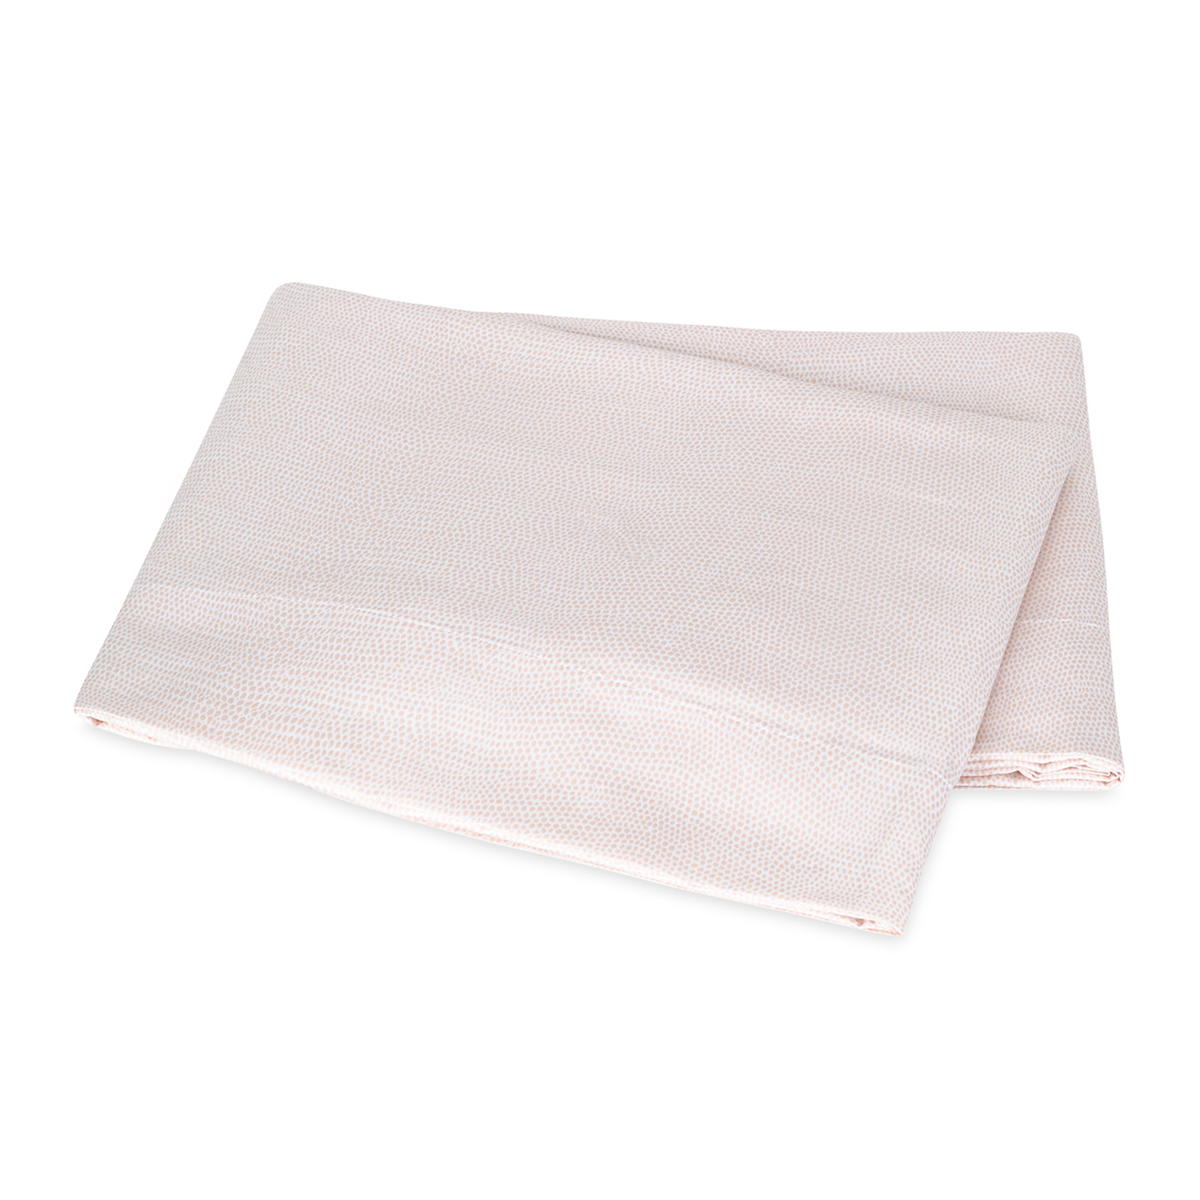 Folded Flat Sheet of Pink Matouk Jasper Bedding